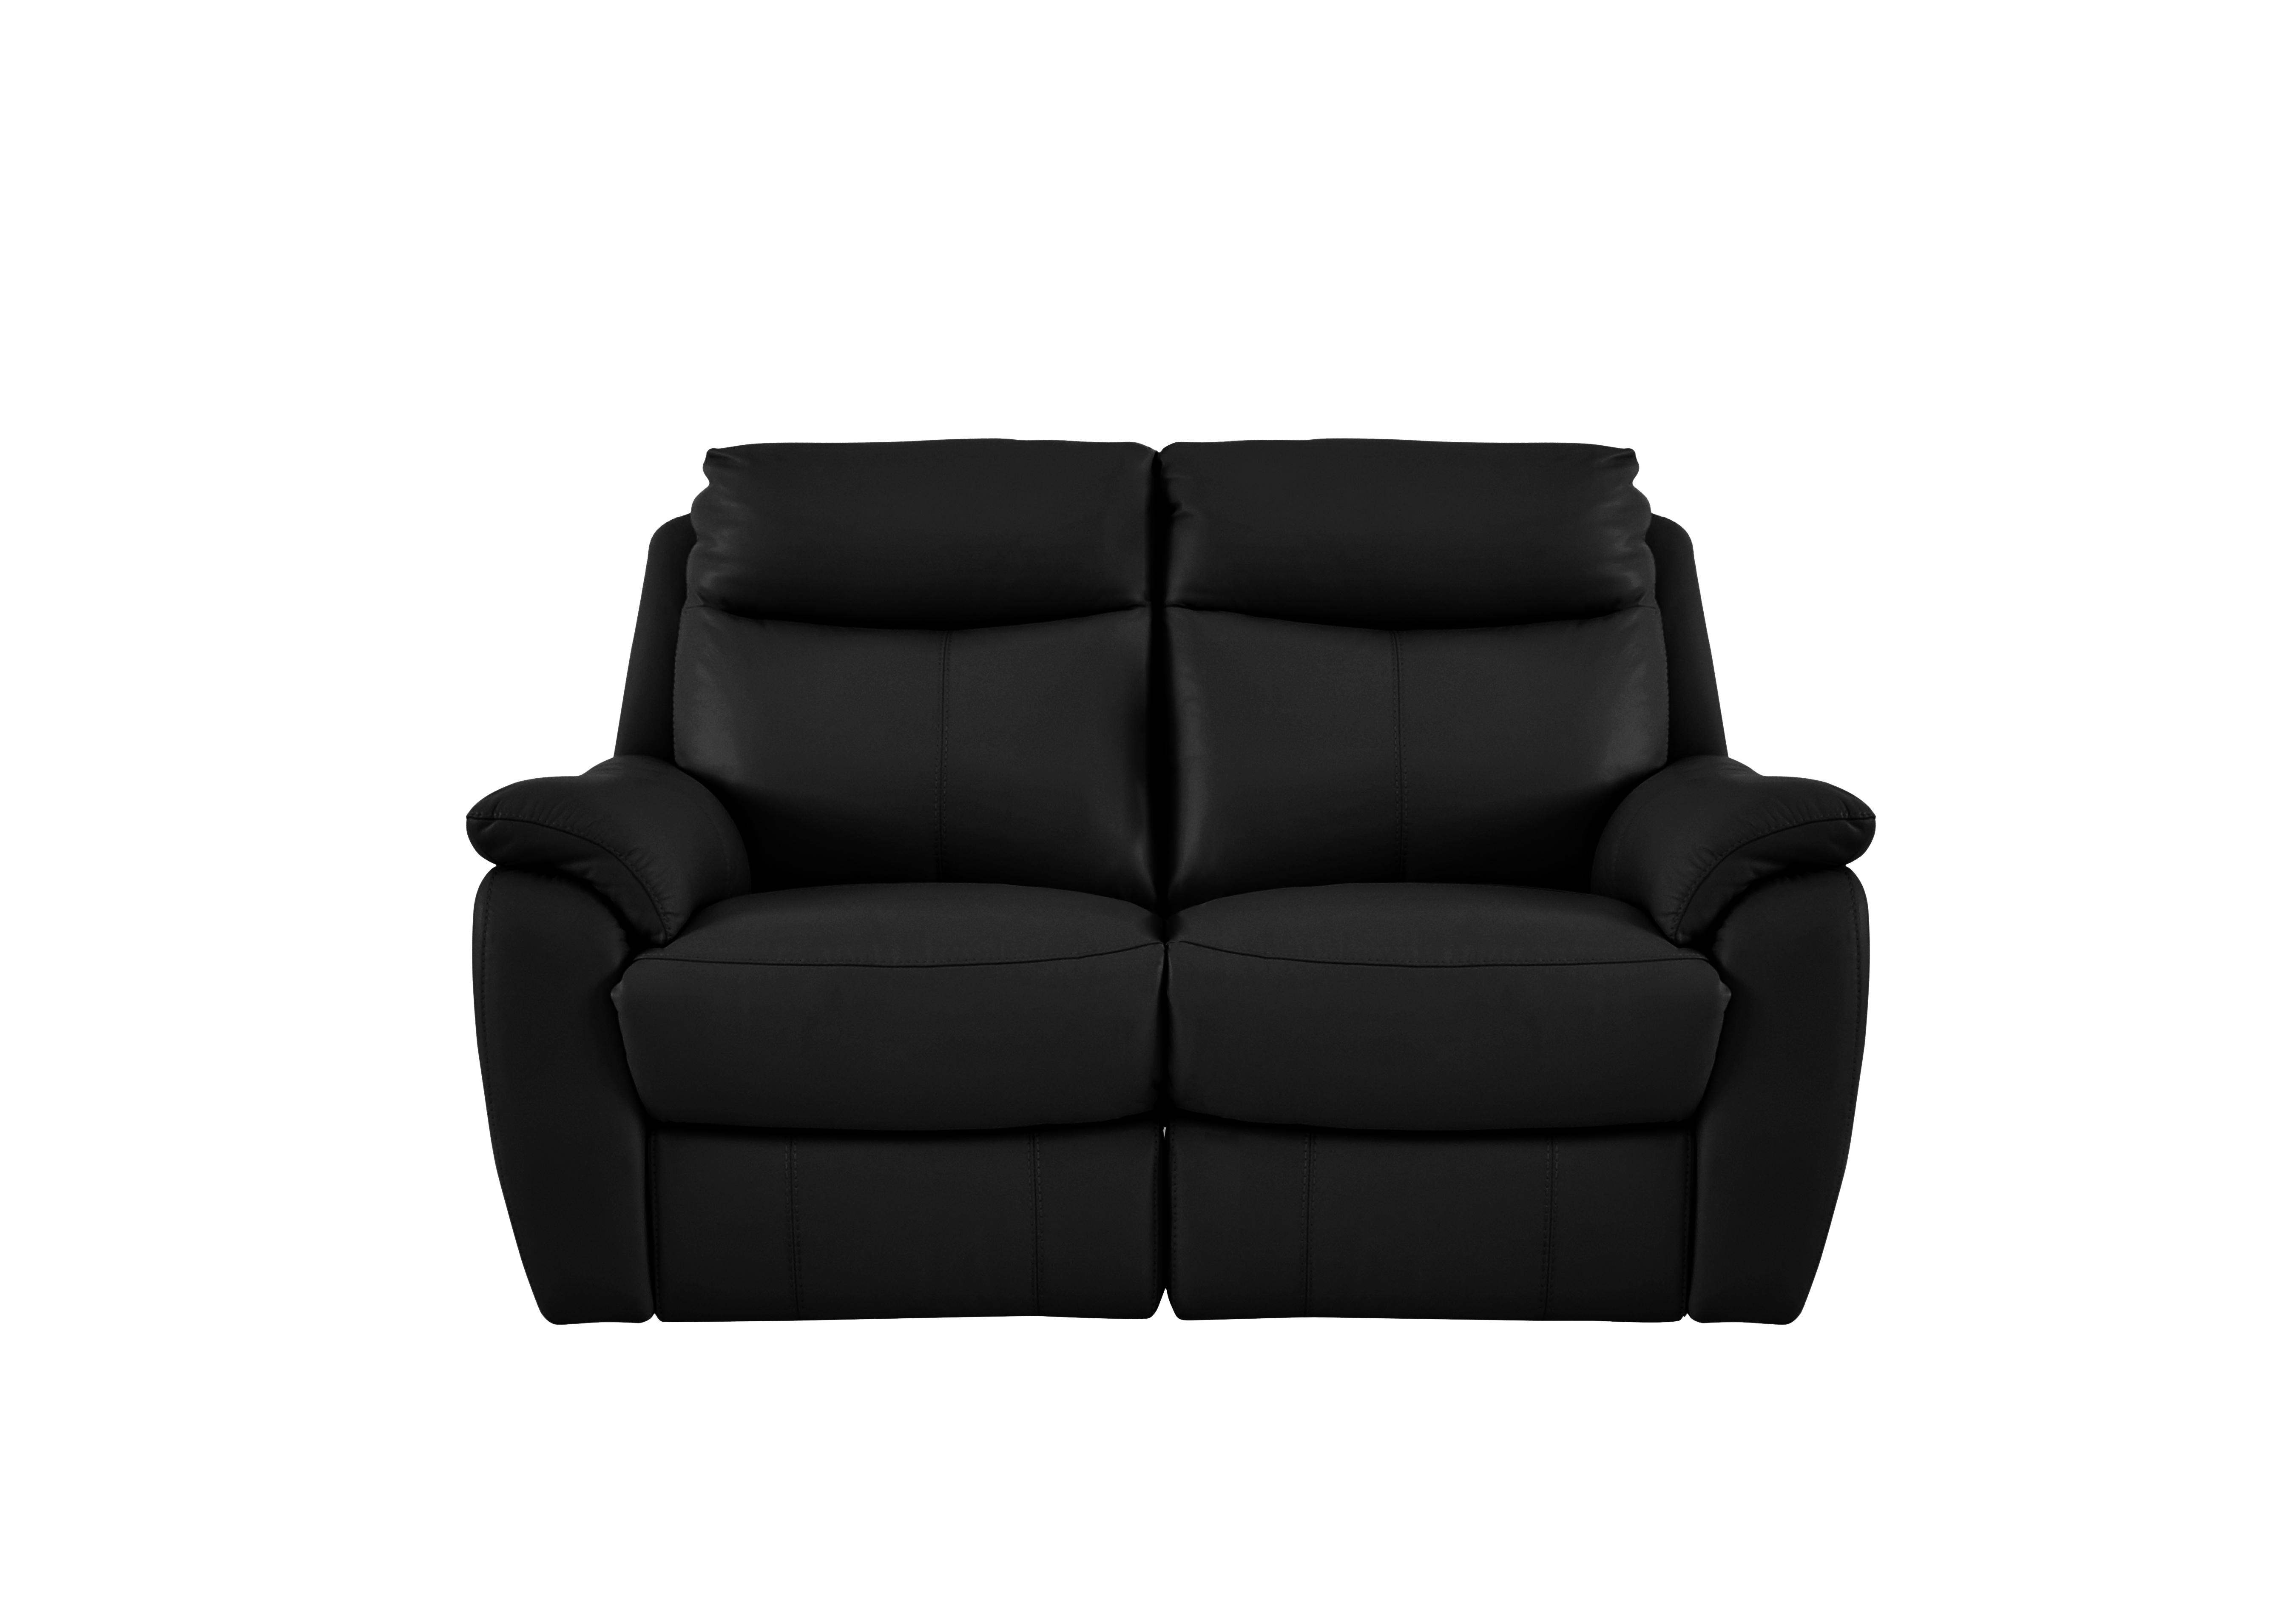 Snug 2 Seater Leather Sofa in Bv-3500 Classic Black on Furniture Village